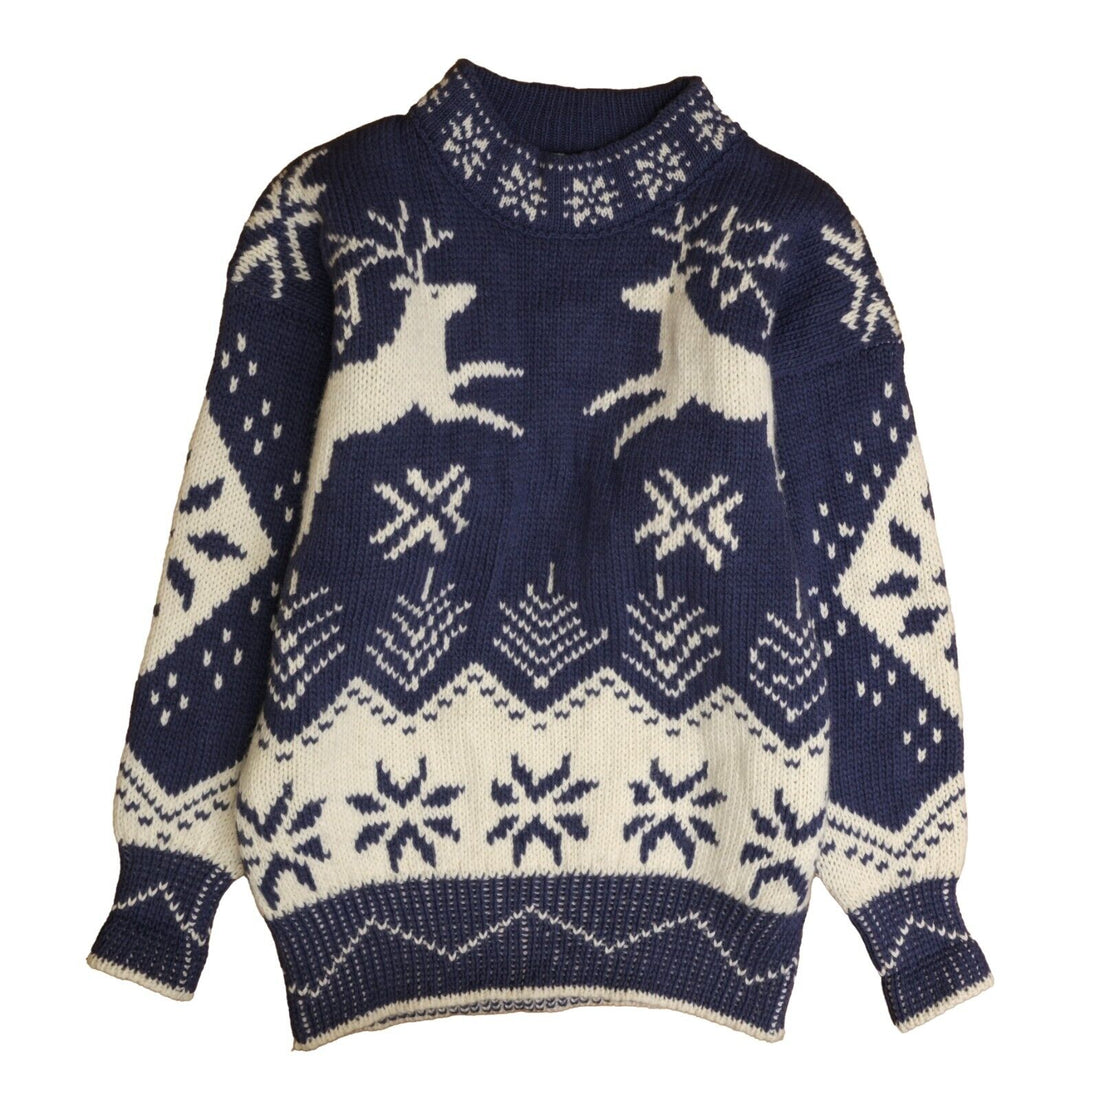 Vintage Snowy Peak Reindeer Wool Knit Crewneck Sweater Size Large Fair Isle